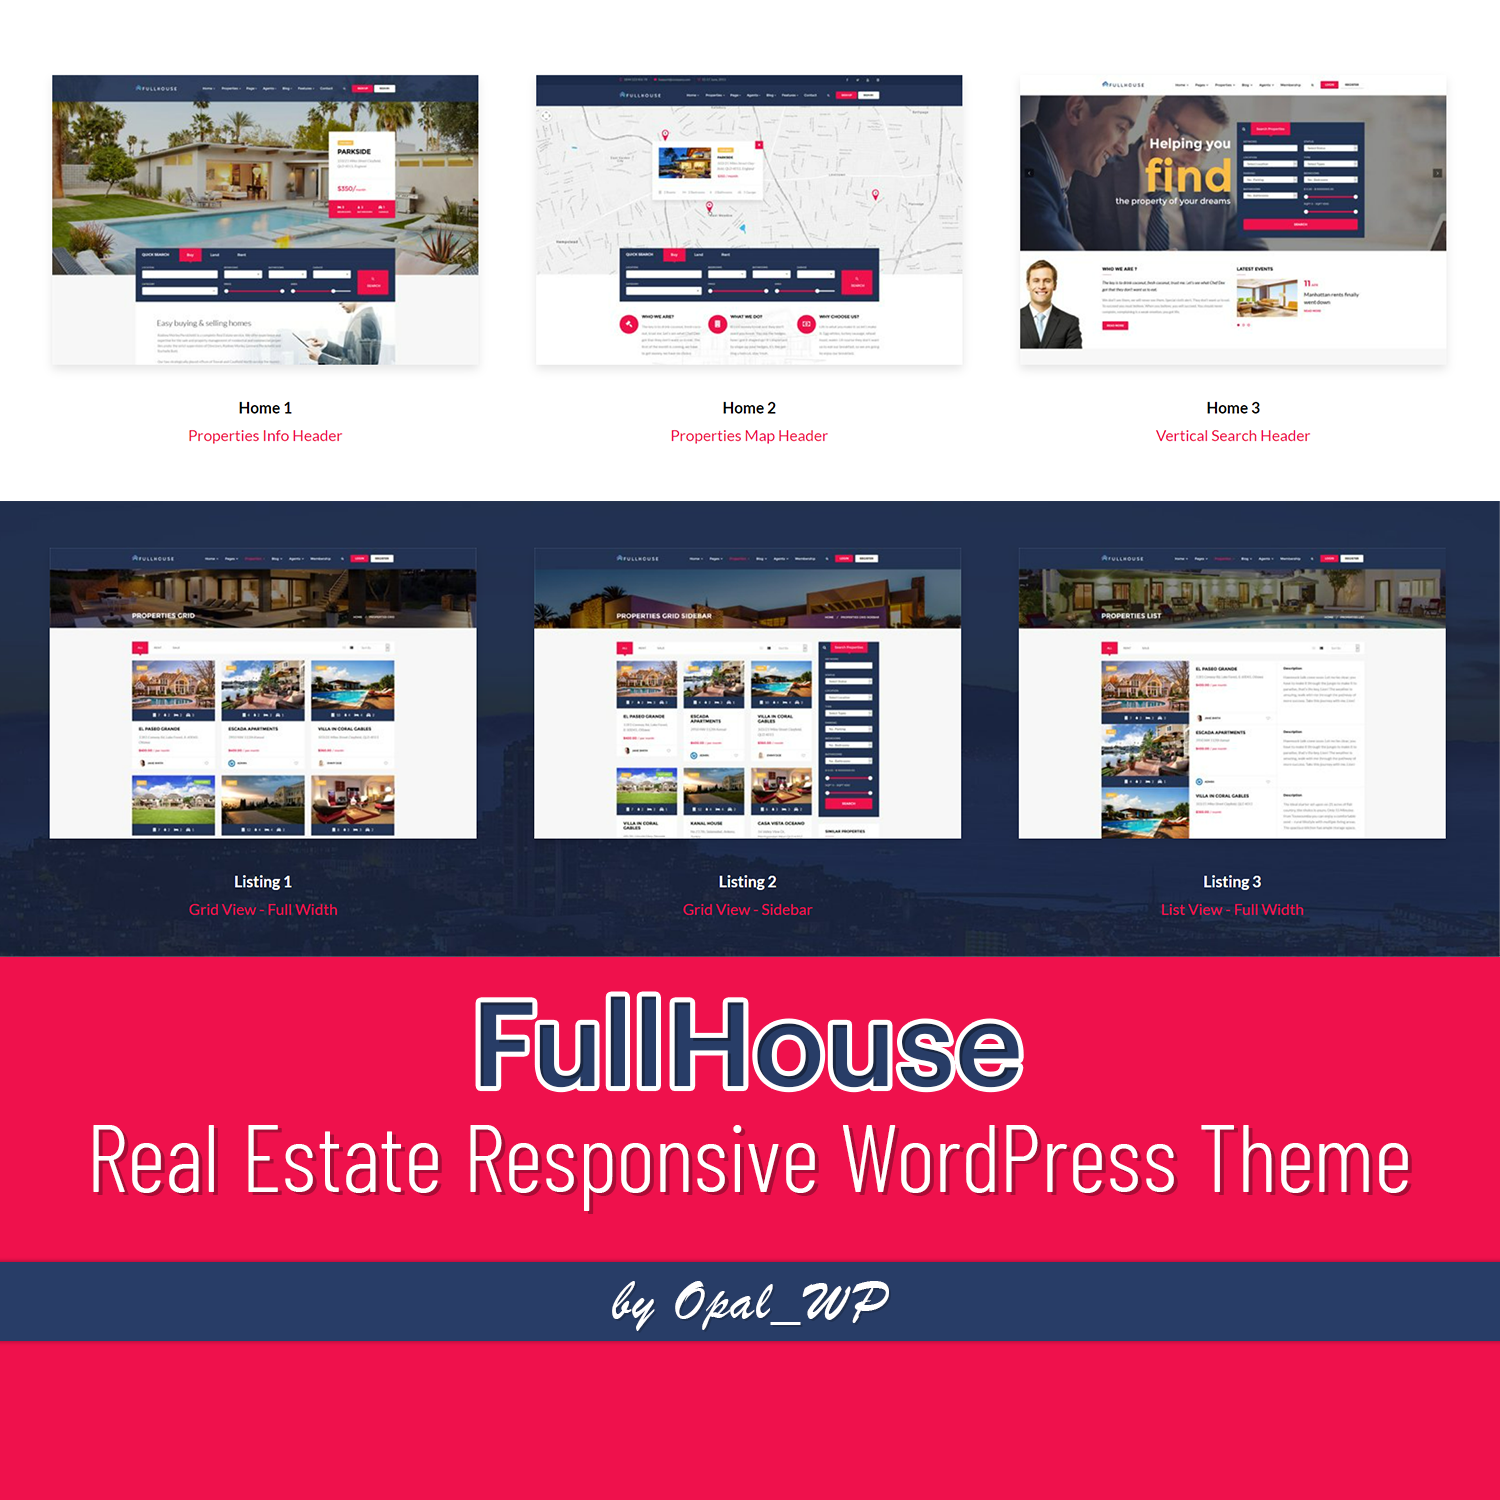 Preview fullhouse real estate responsive wordpress theme.